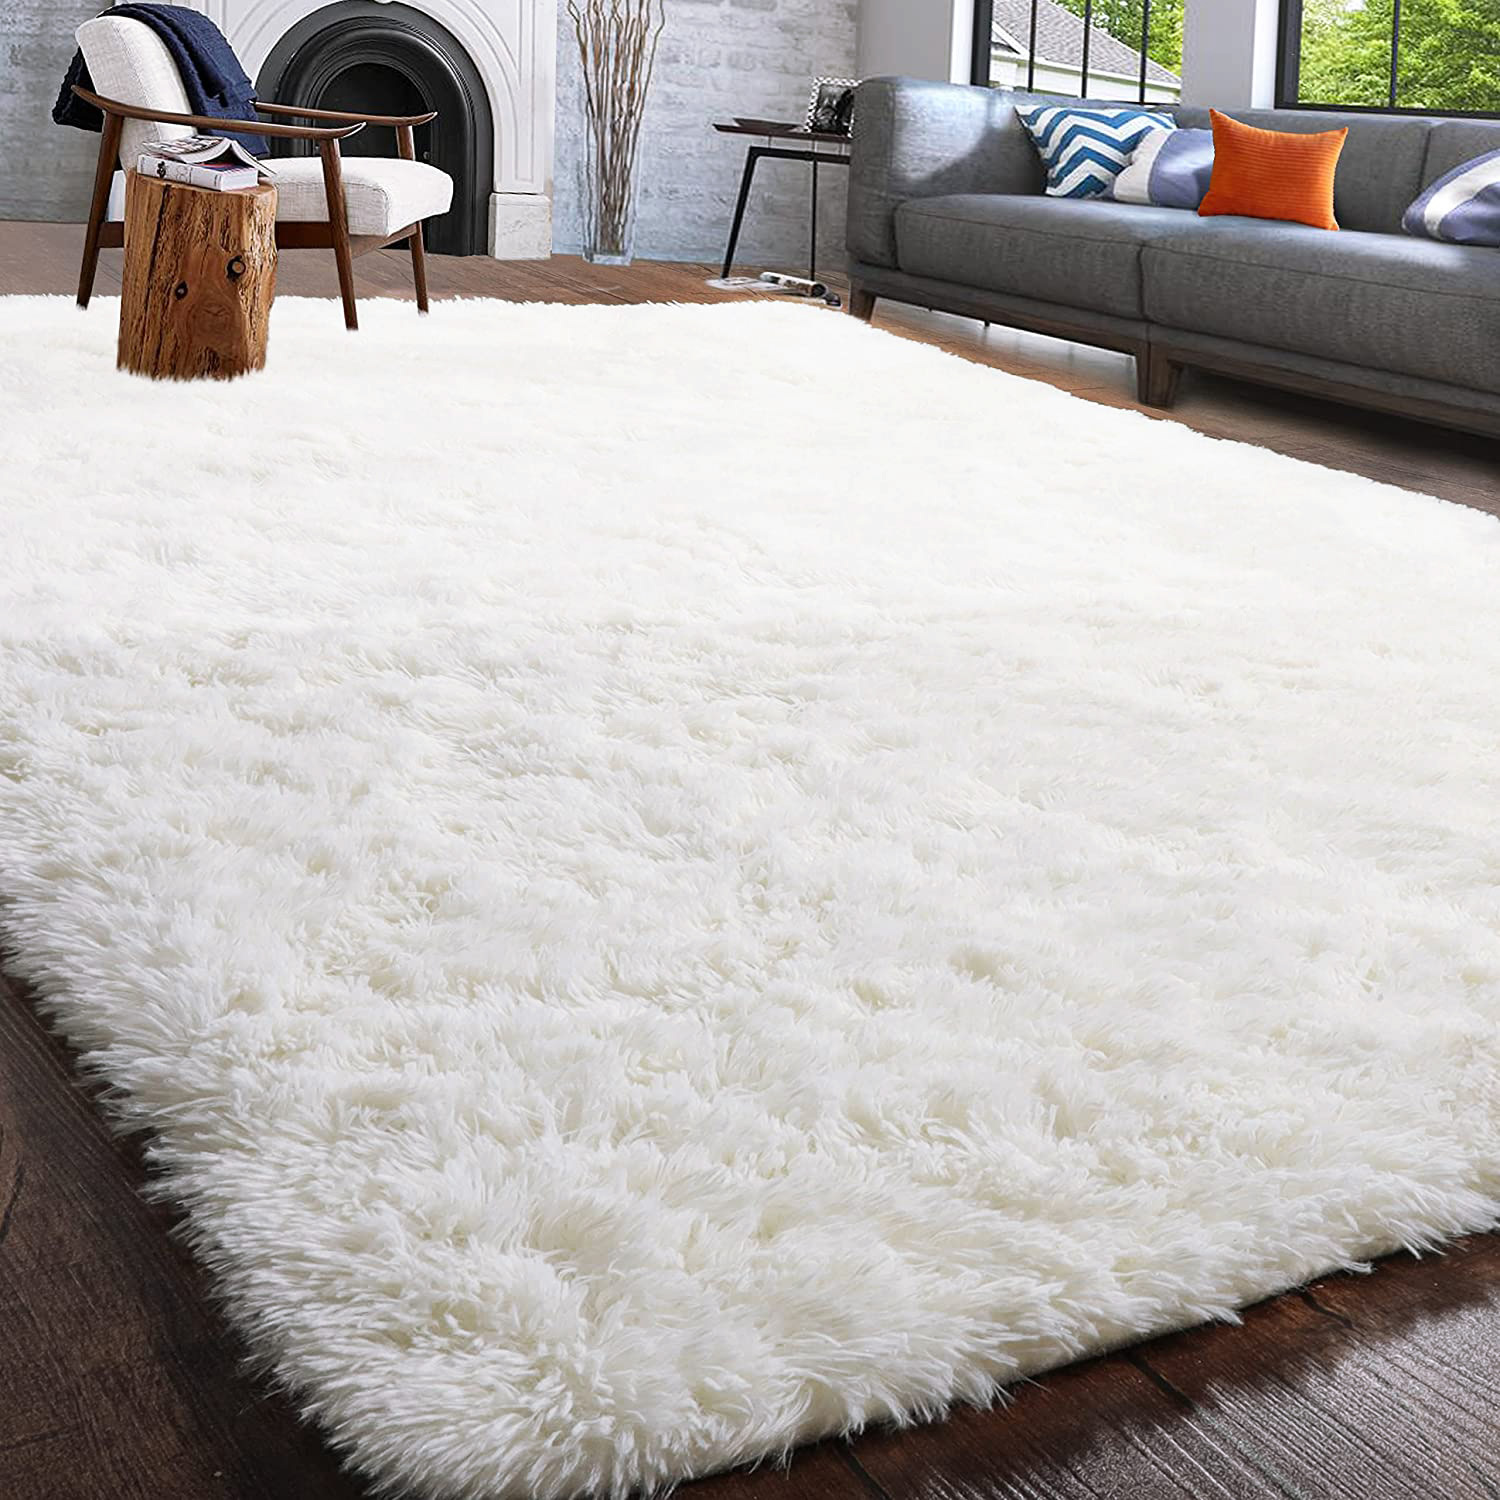 XL Comfy Fluffy Soft Anti-Slip Rug Floor Mat (White,200 x400)